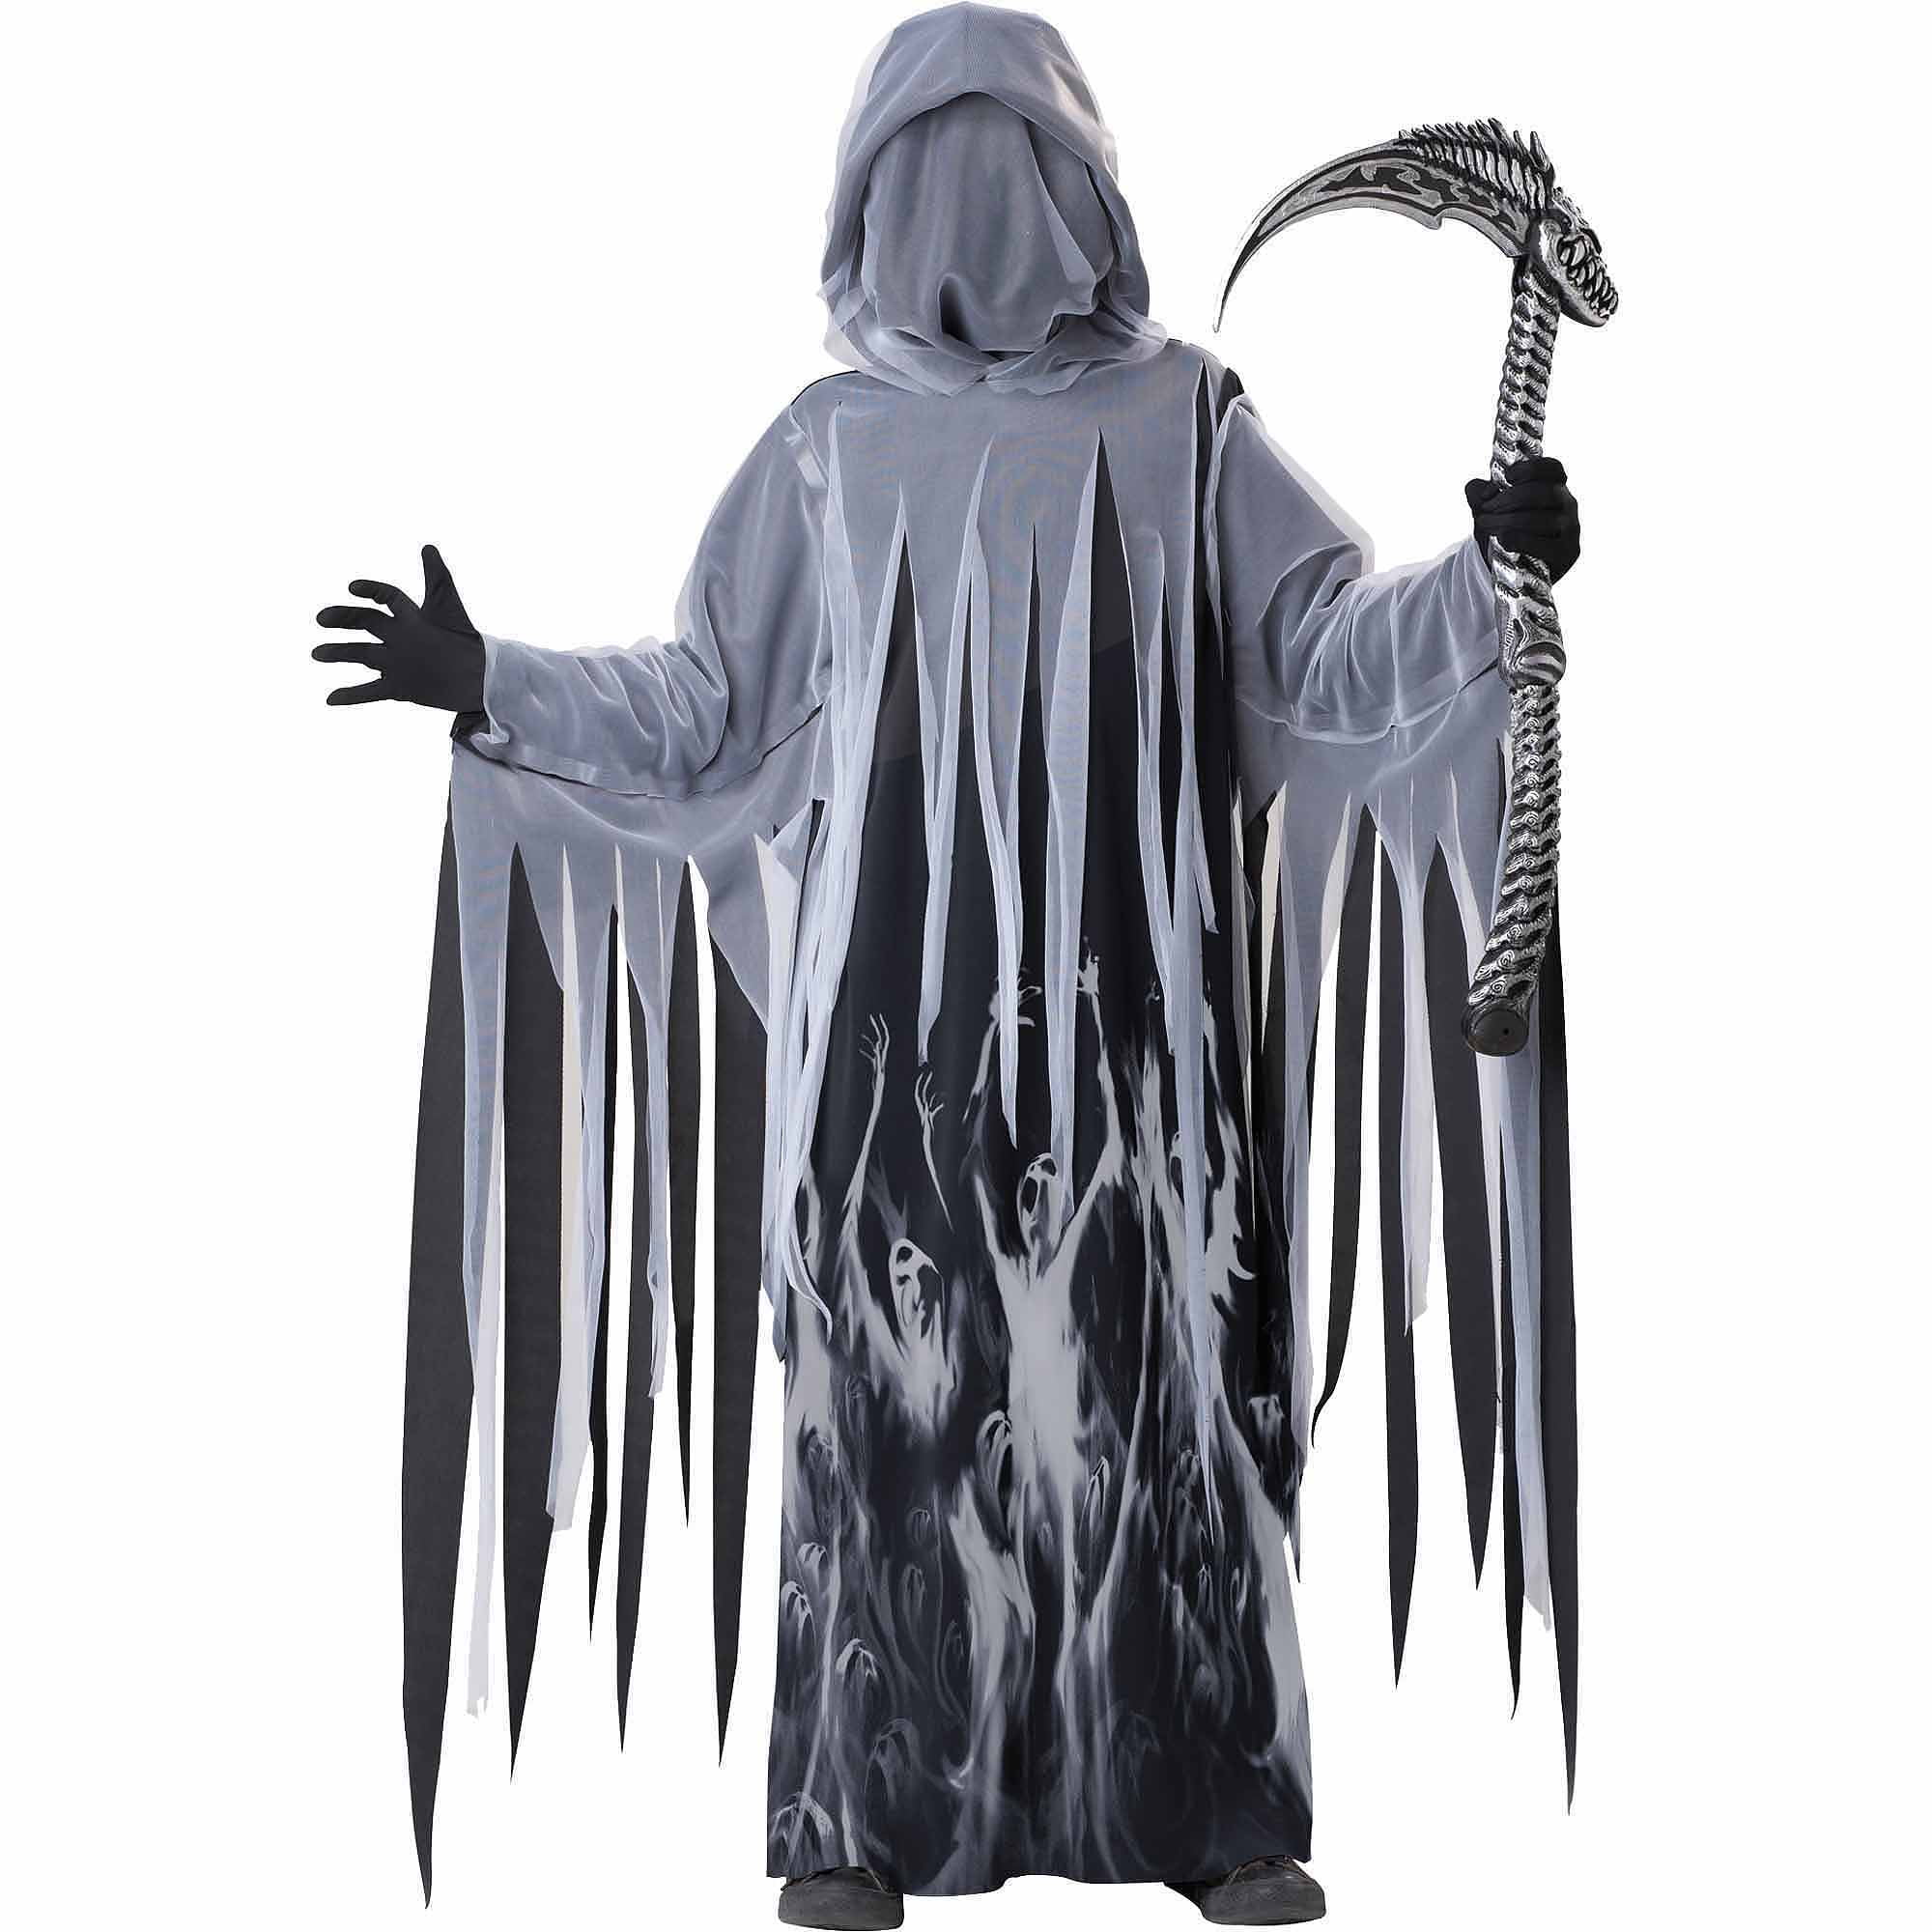 GRIM REAPER & MASK Men's Fancy Dress Costume Halloween-Scary-Creepy-Death NEW 